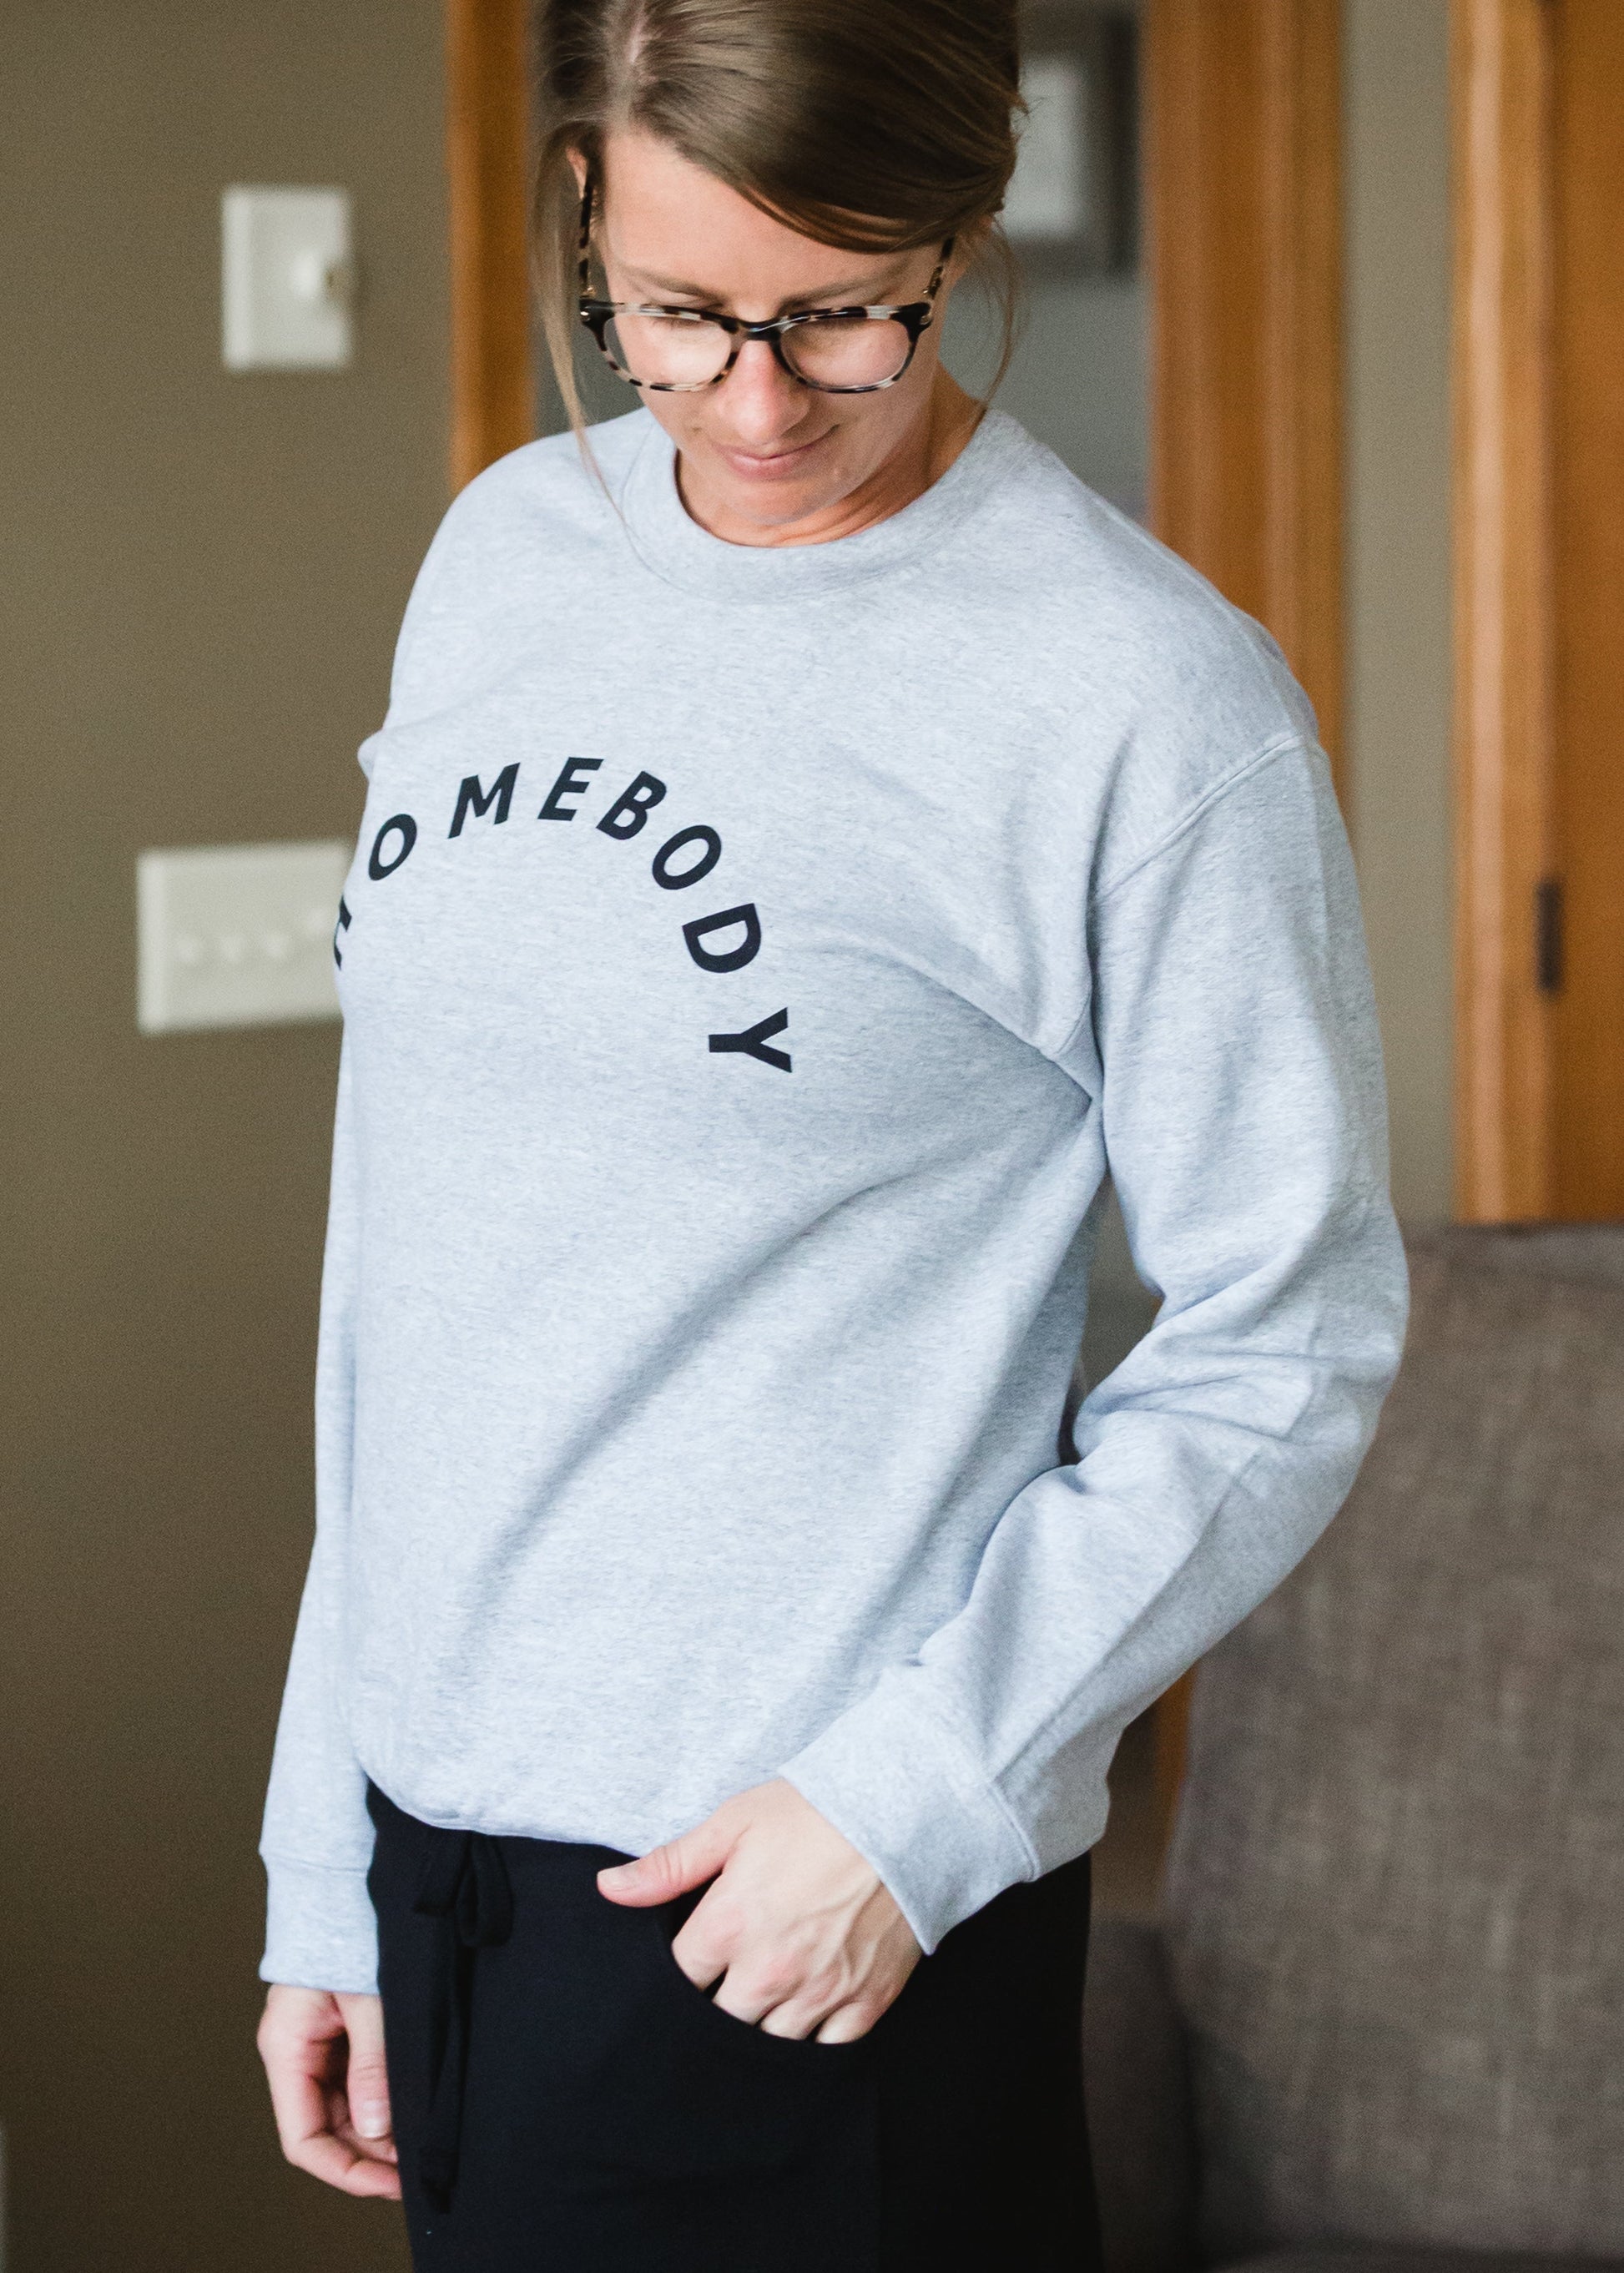 Gray Homebody Crewneck Sweatshirt - FINAL SALE Tops